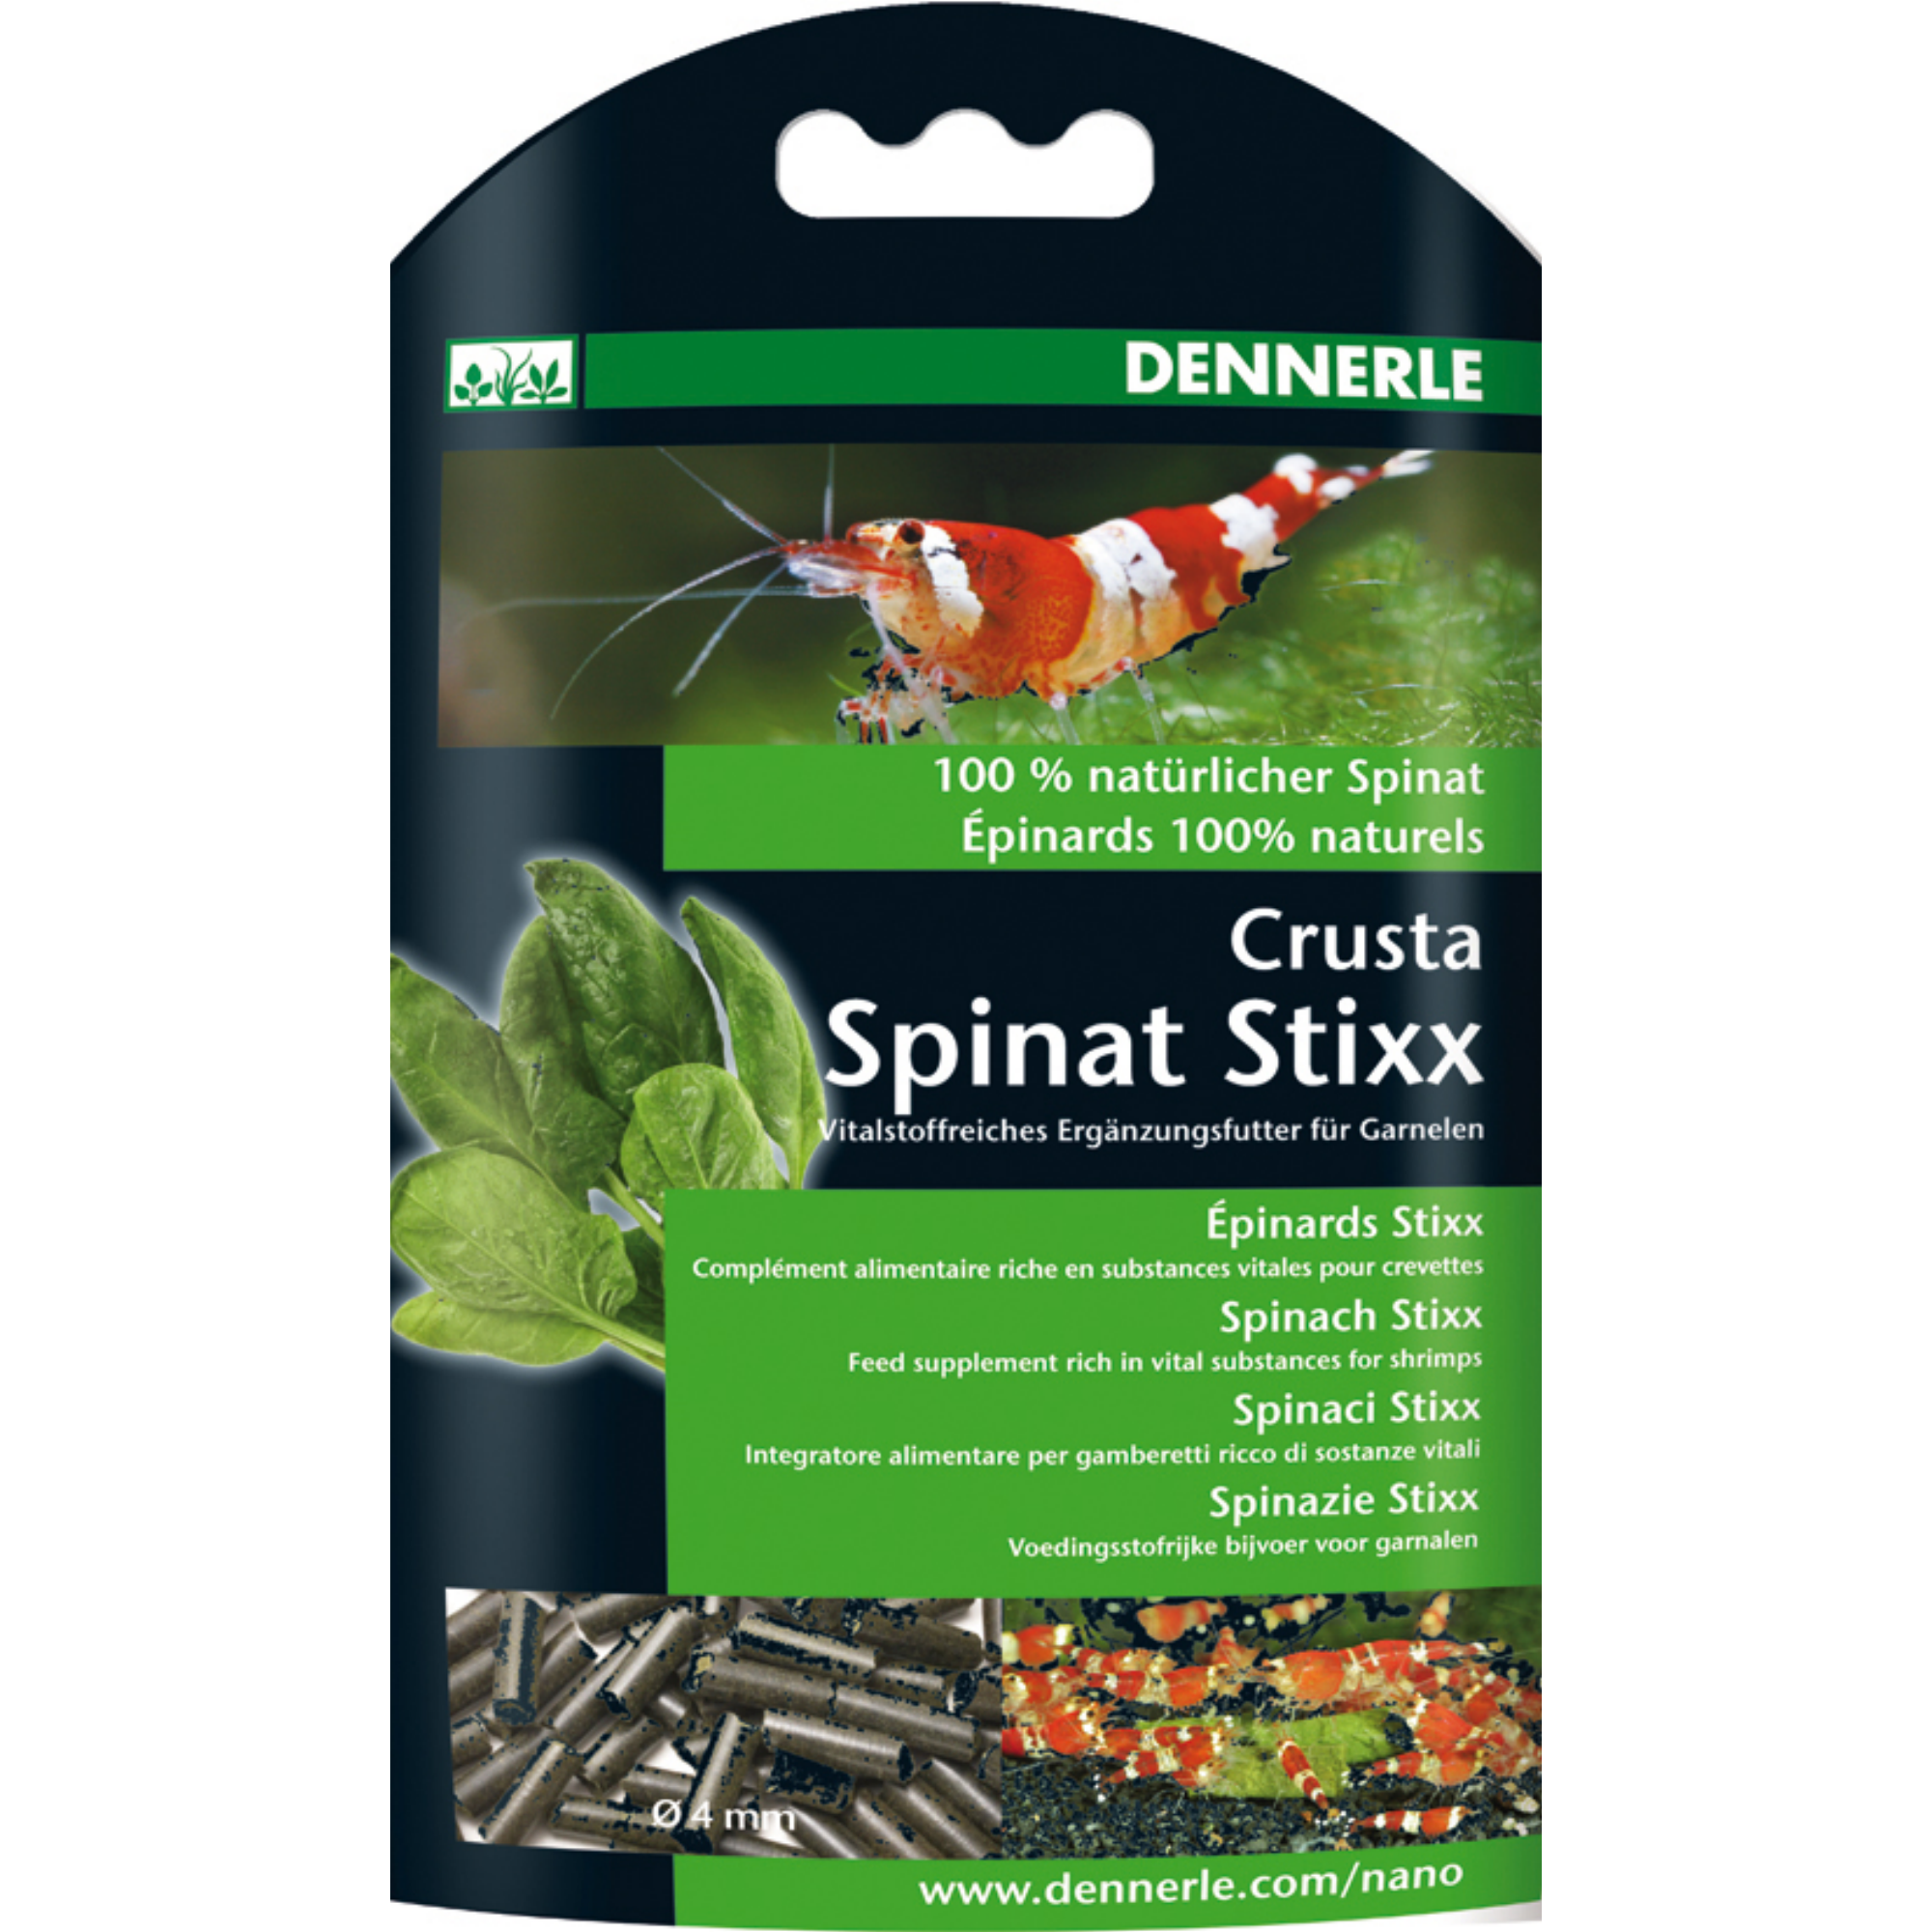 Spinat-Stixx "Crusta" 30 g + product picture